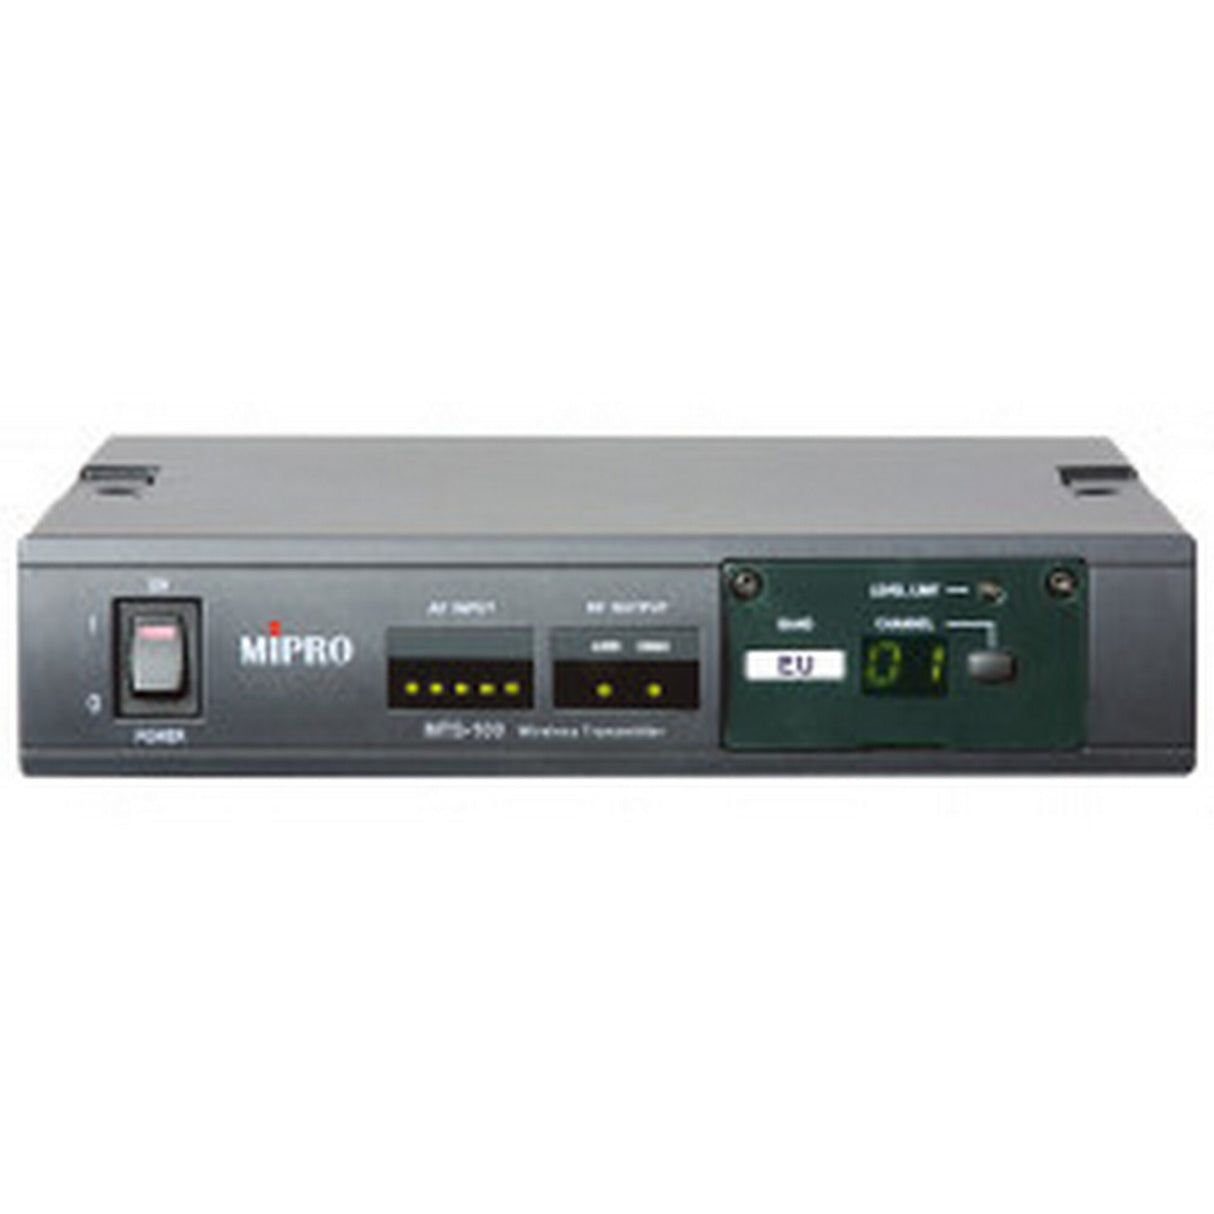 MIPRO MTS-100 Digital Stationary Transmitter, 926 - 928 MHz